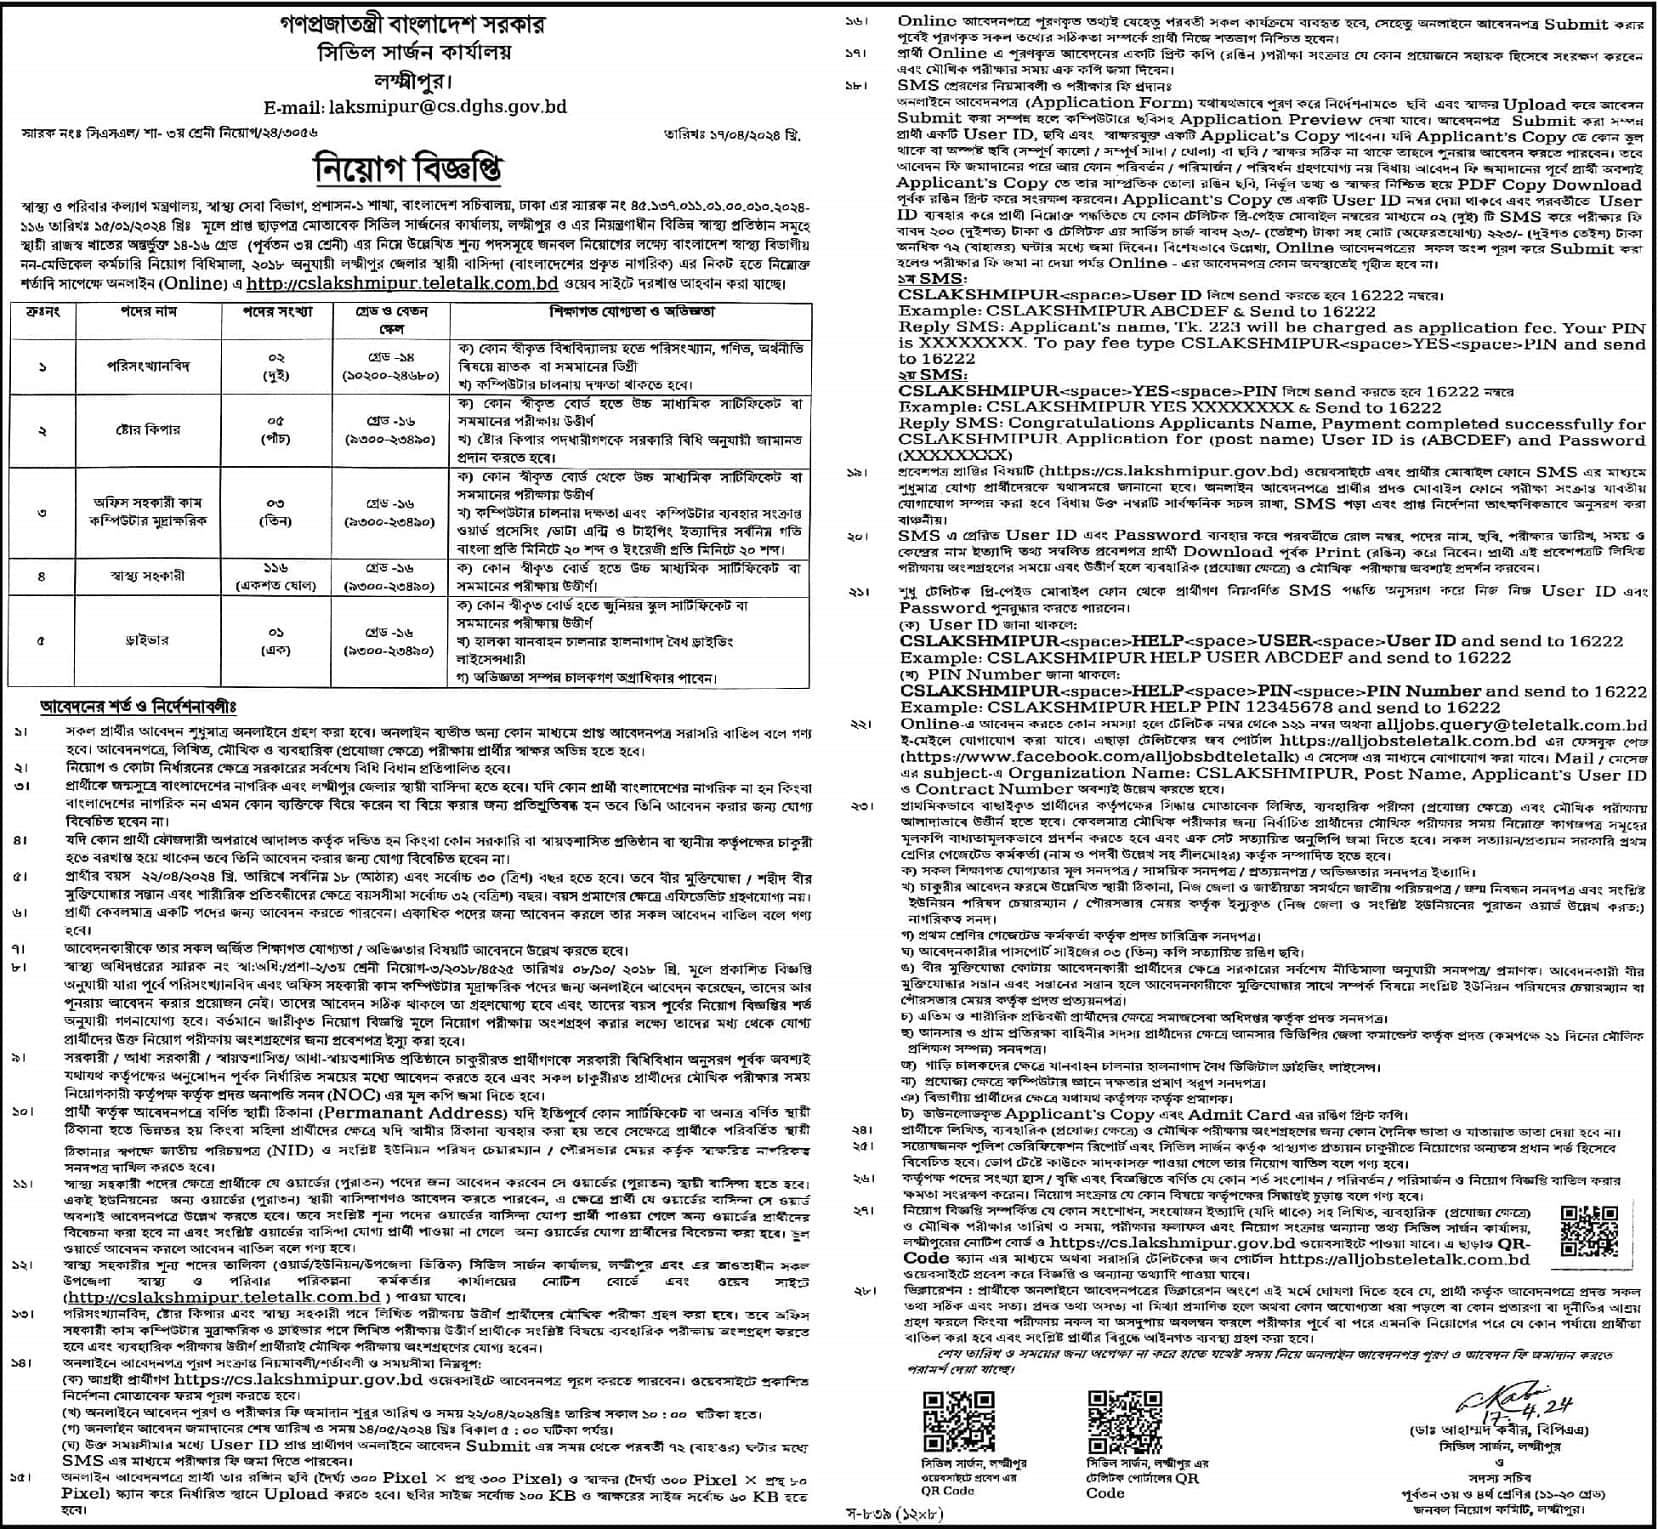 Lakshmipur Civil Surgeon Office Job Circular